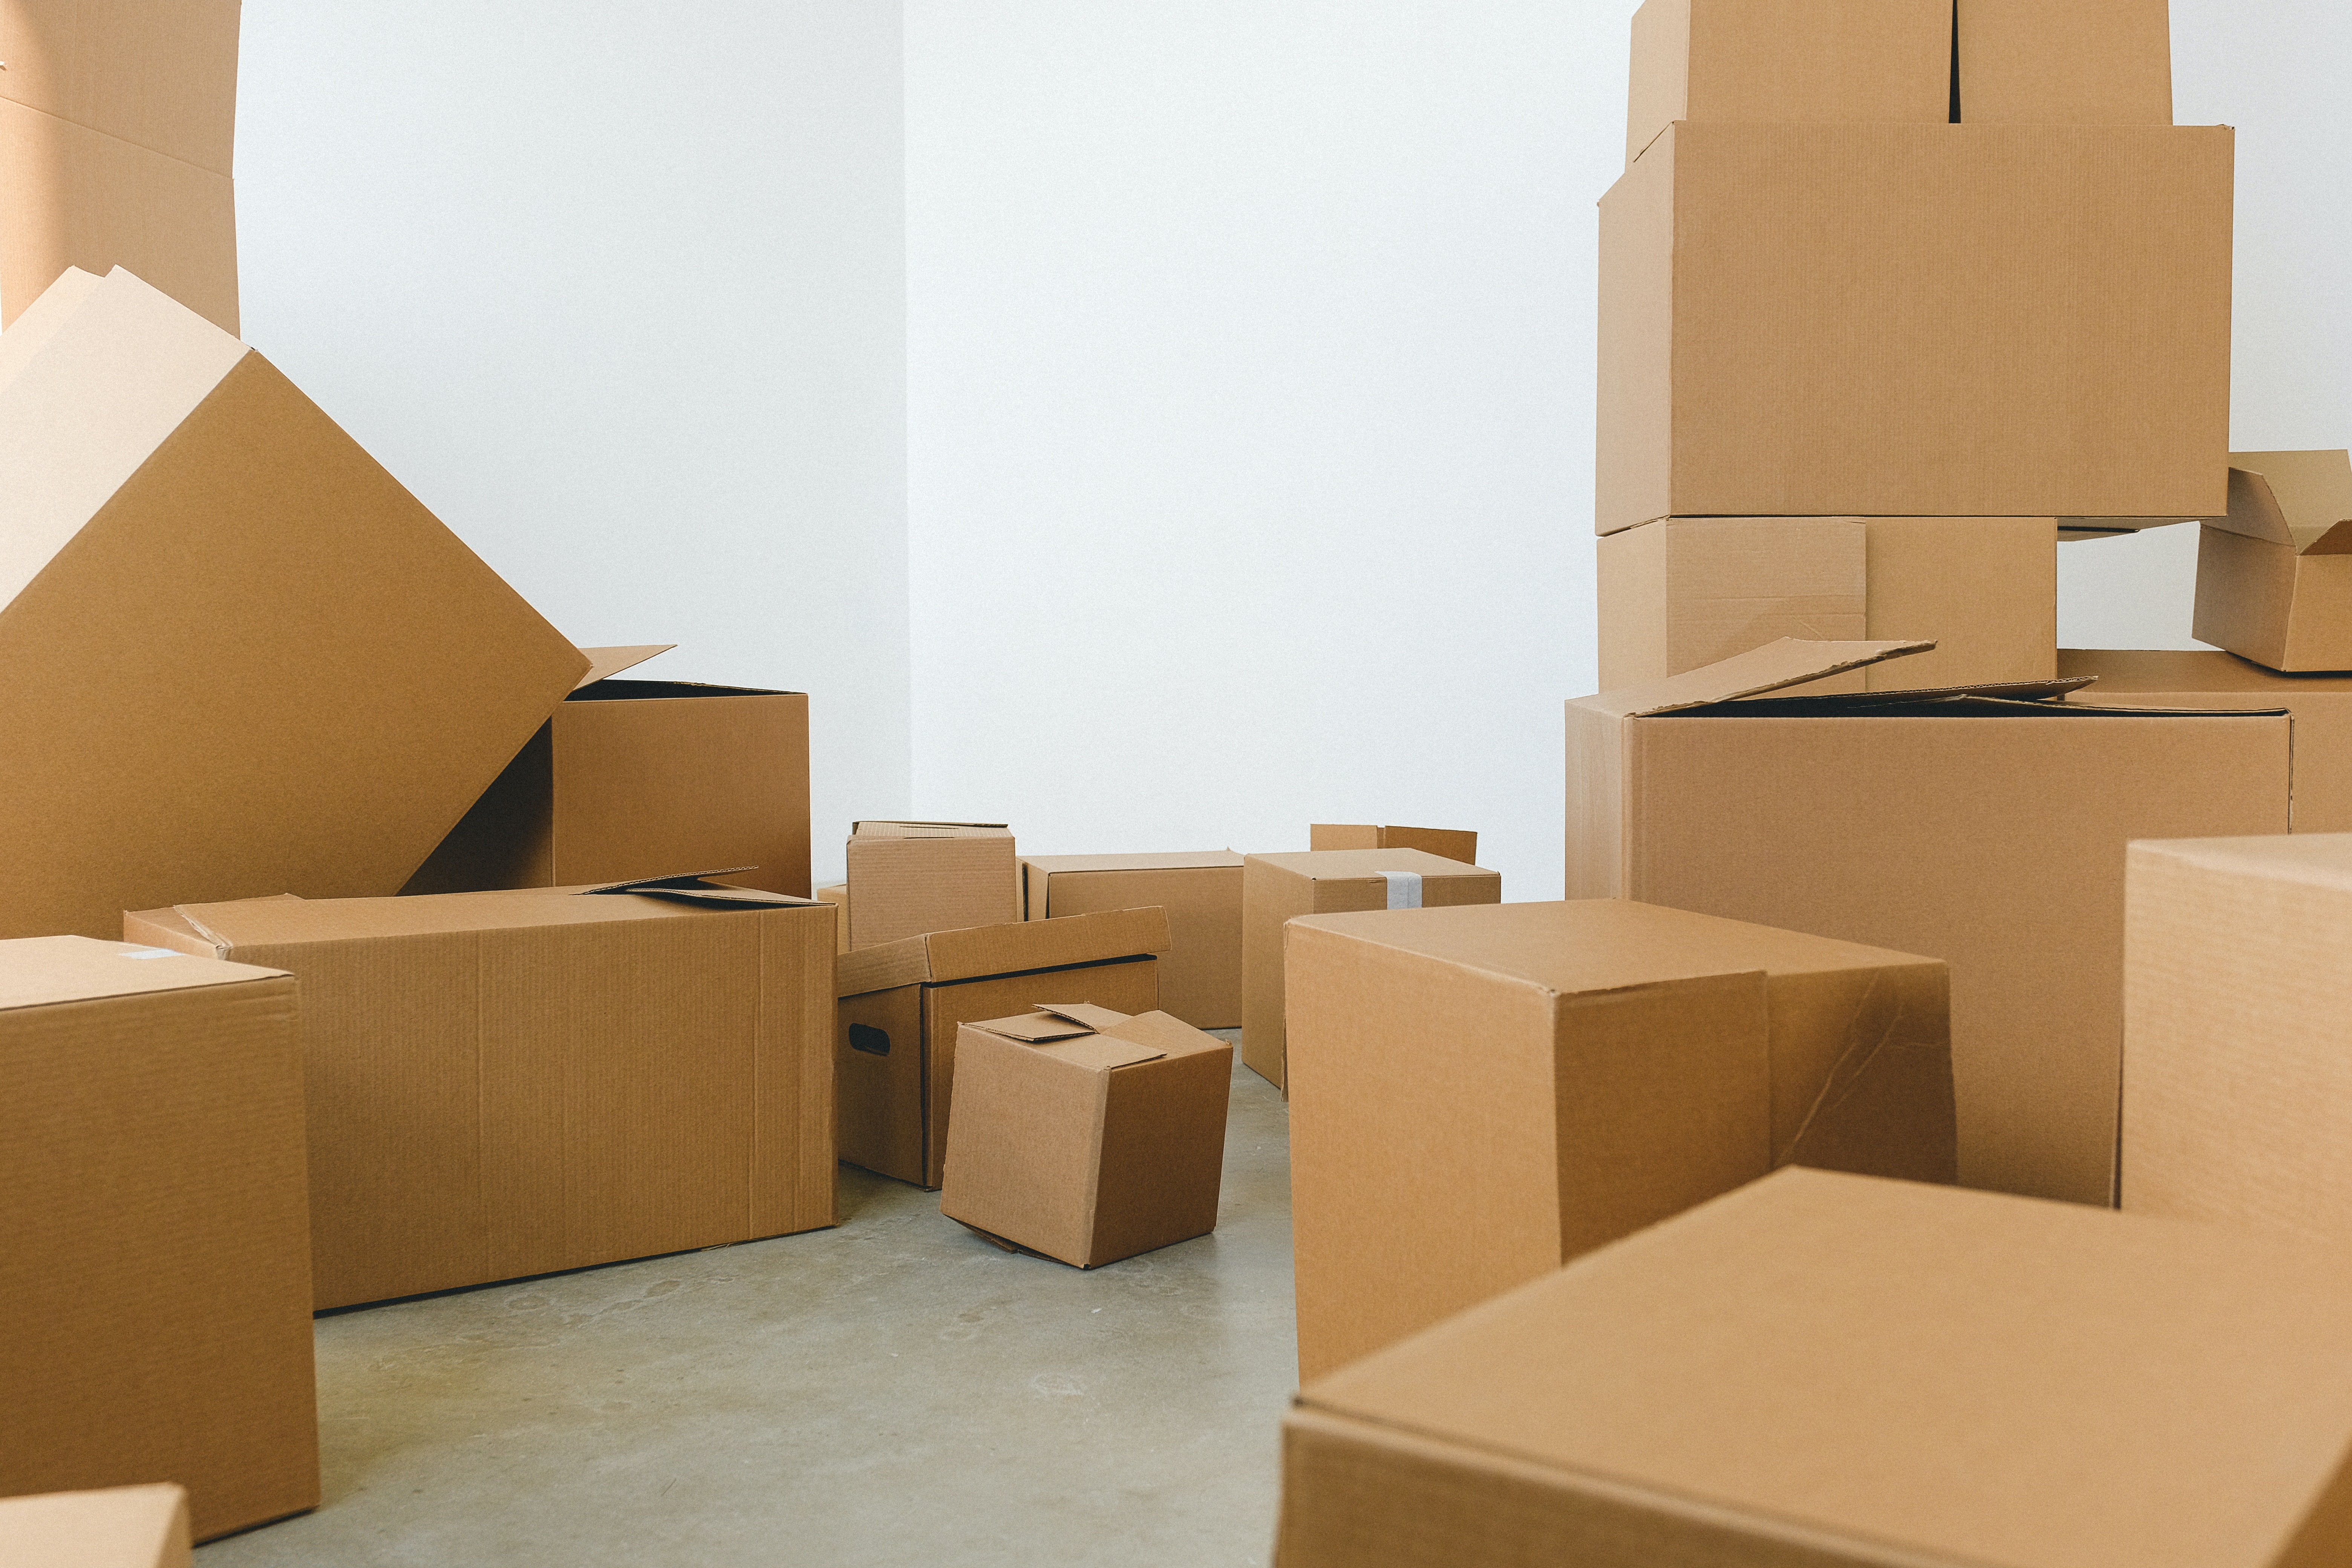 Pile of cardboard boxes scattered on floor. | Source: Pexels